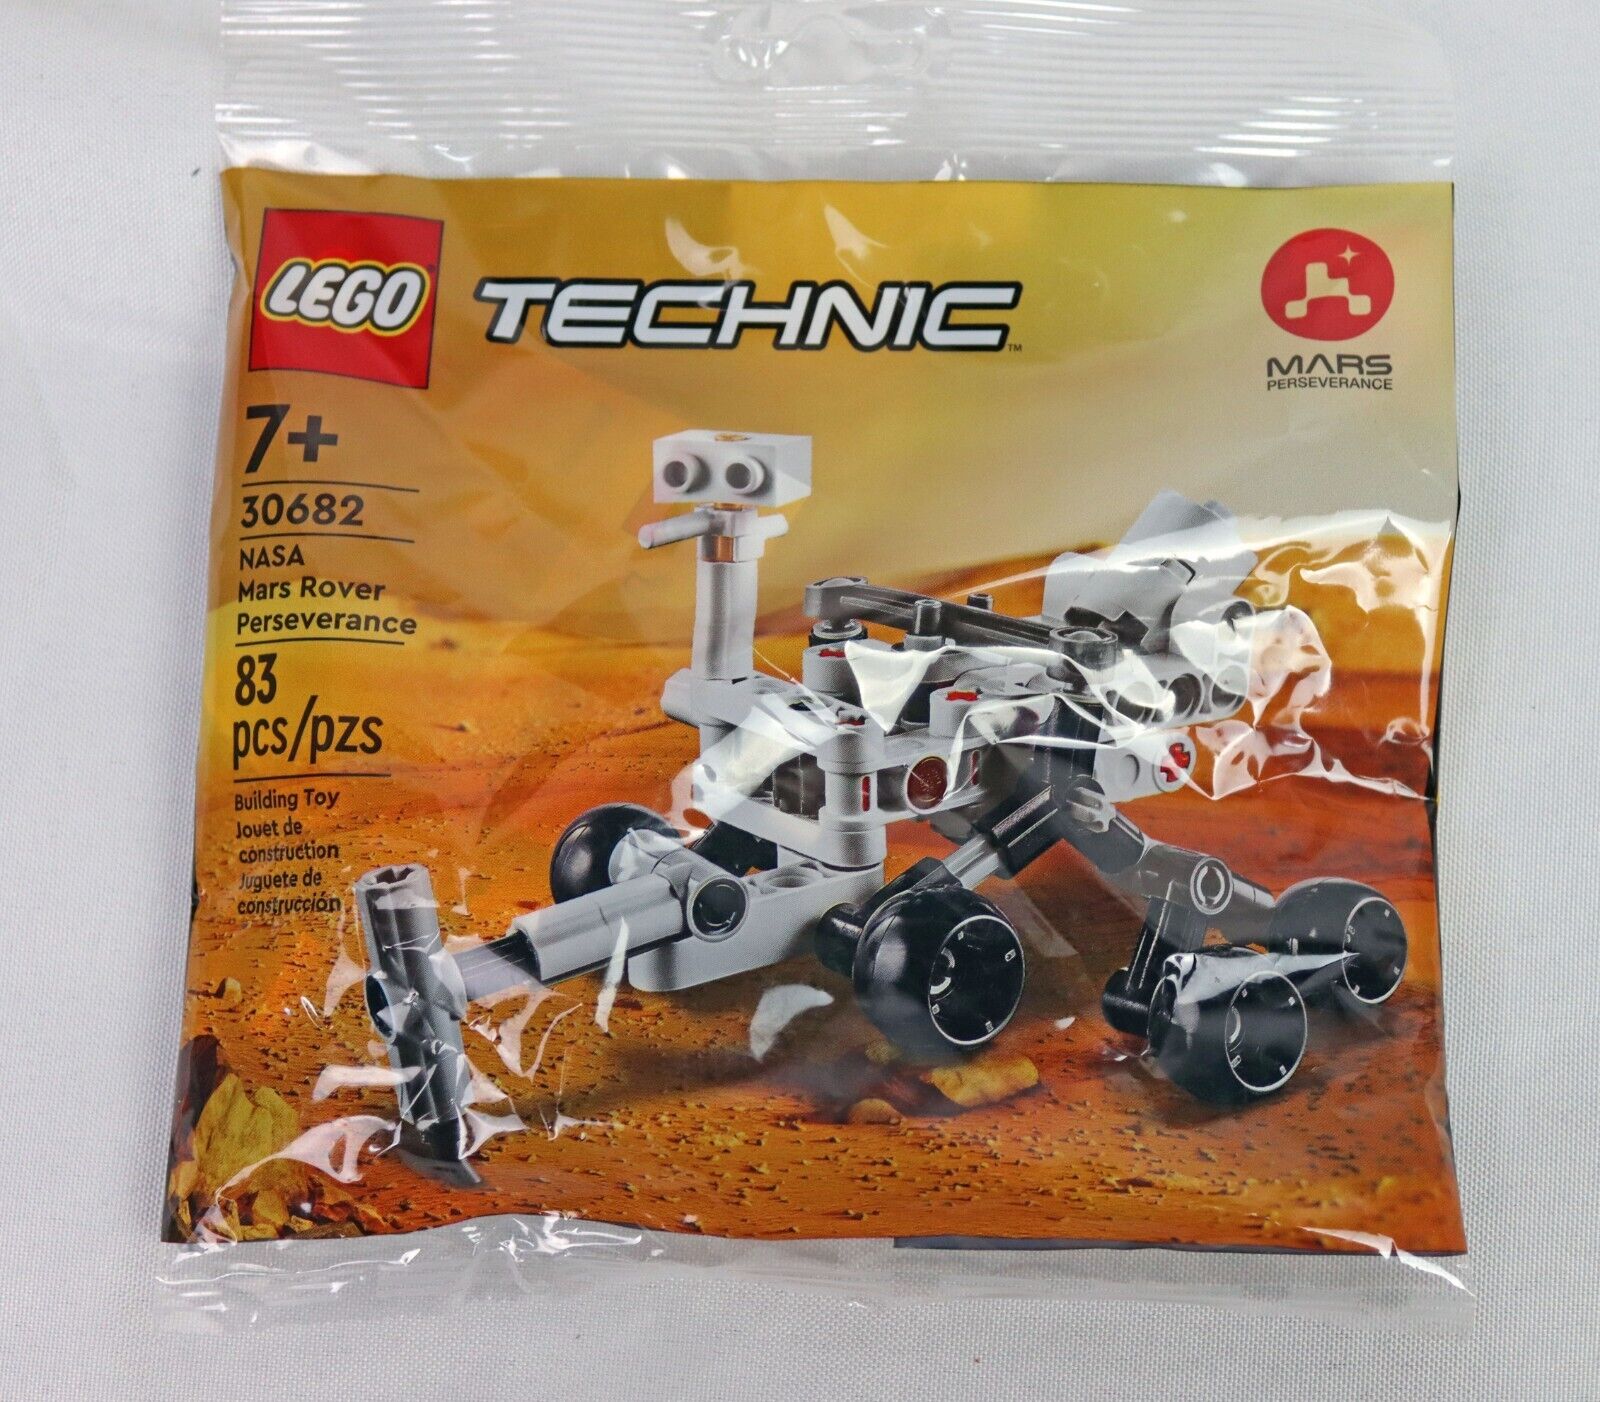 LEGO 30682 Technic NASA Mars Rover Perseverance Polybag 83pcs - Brand New